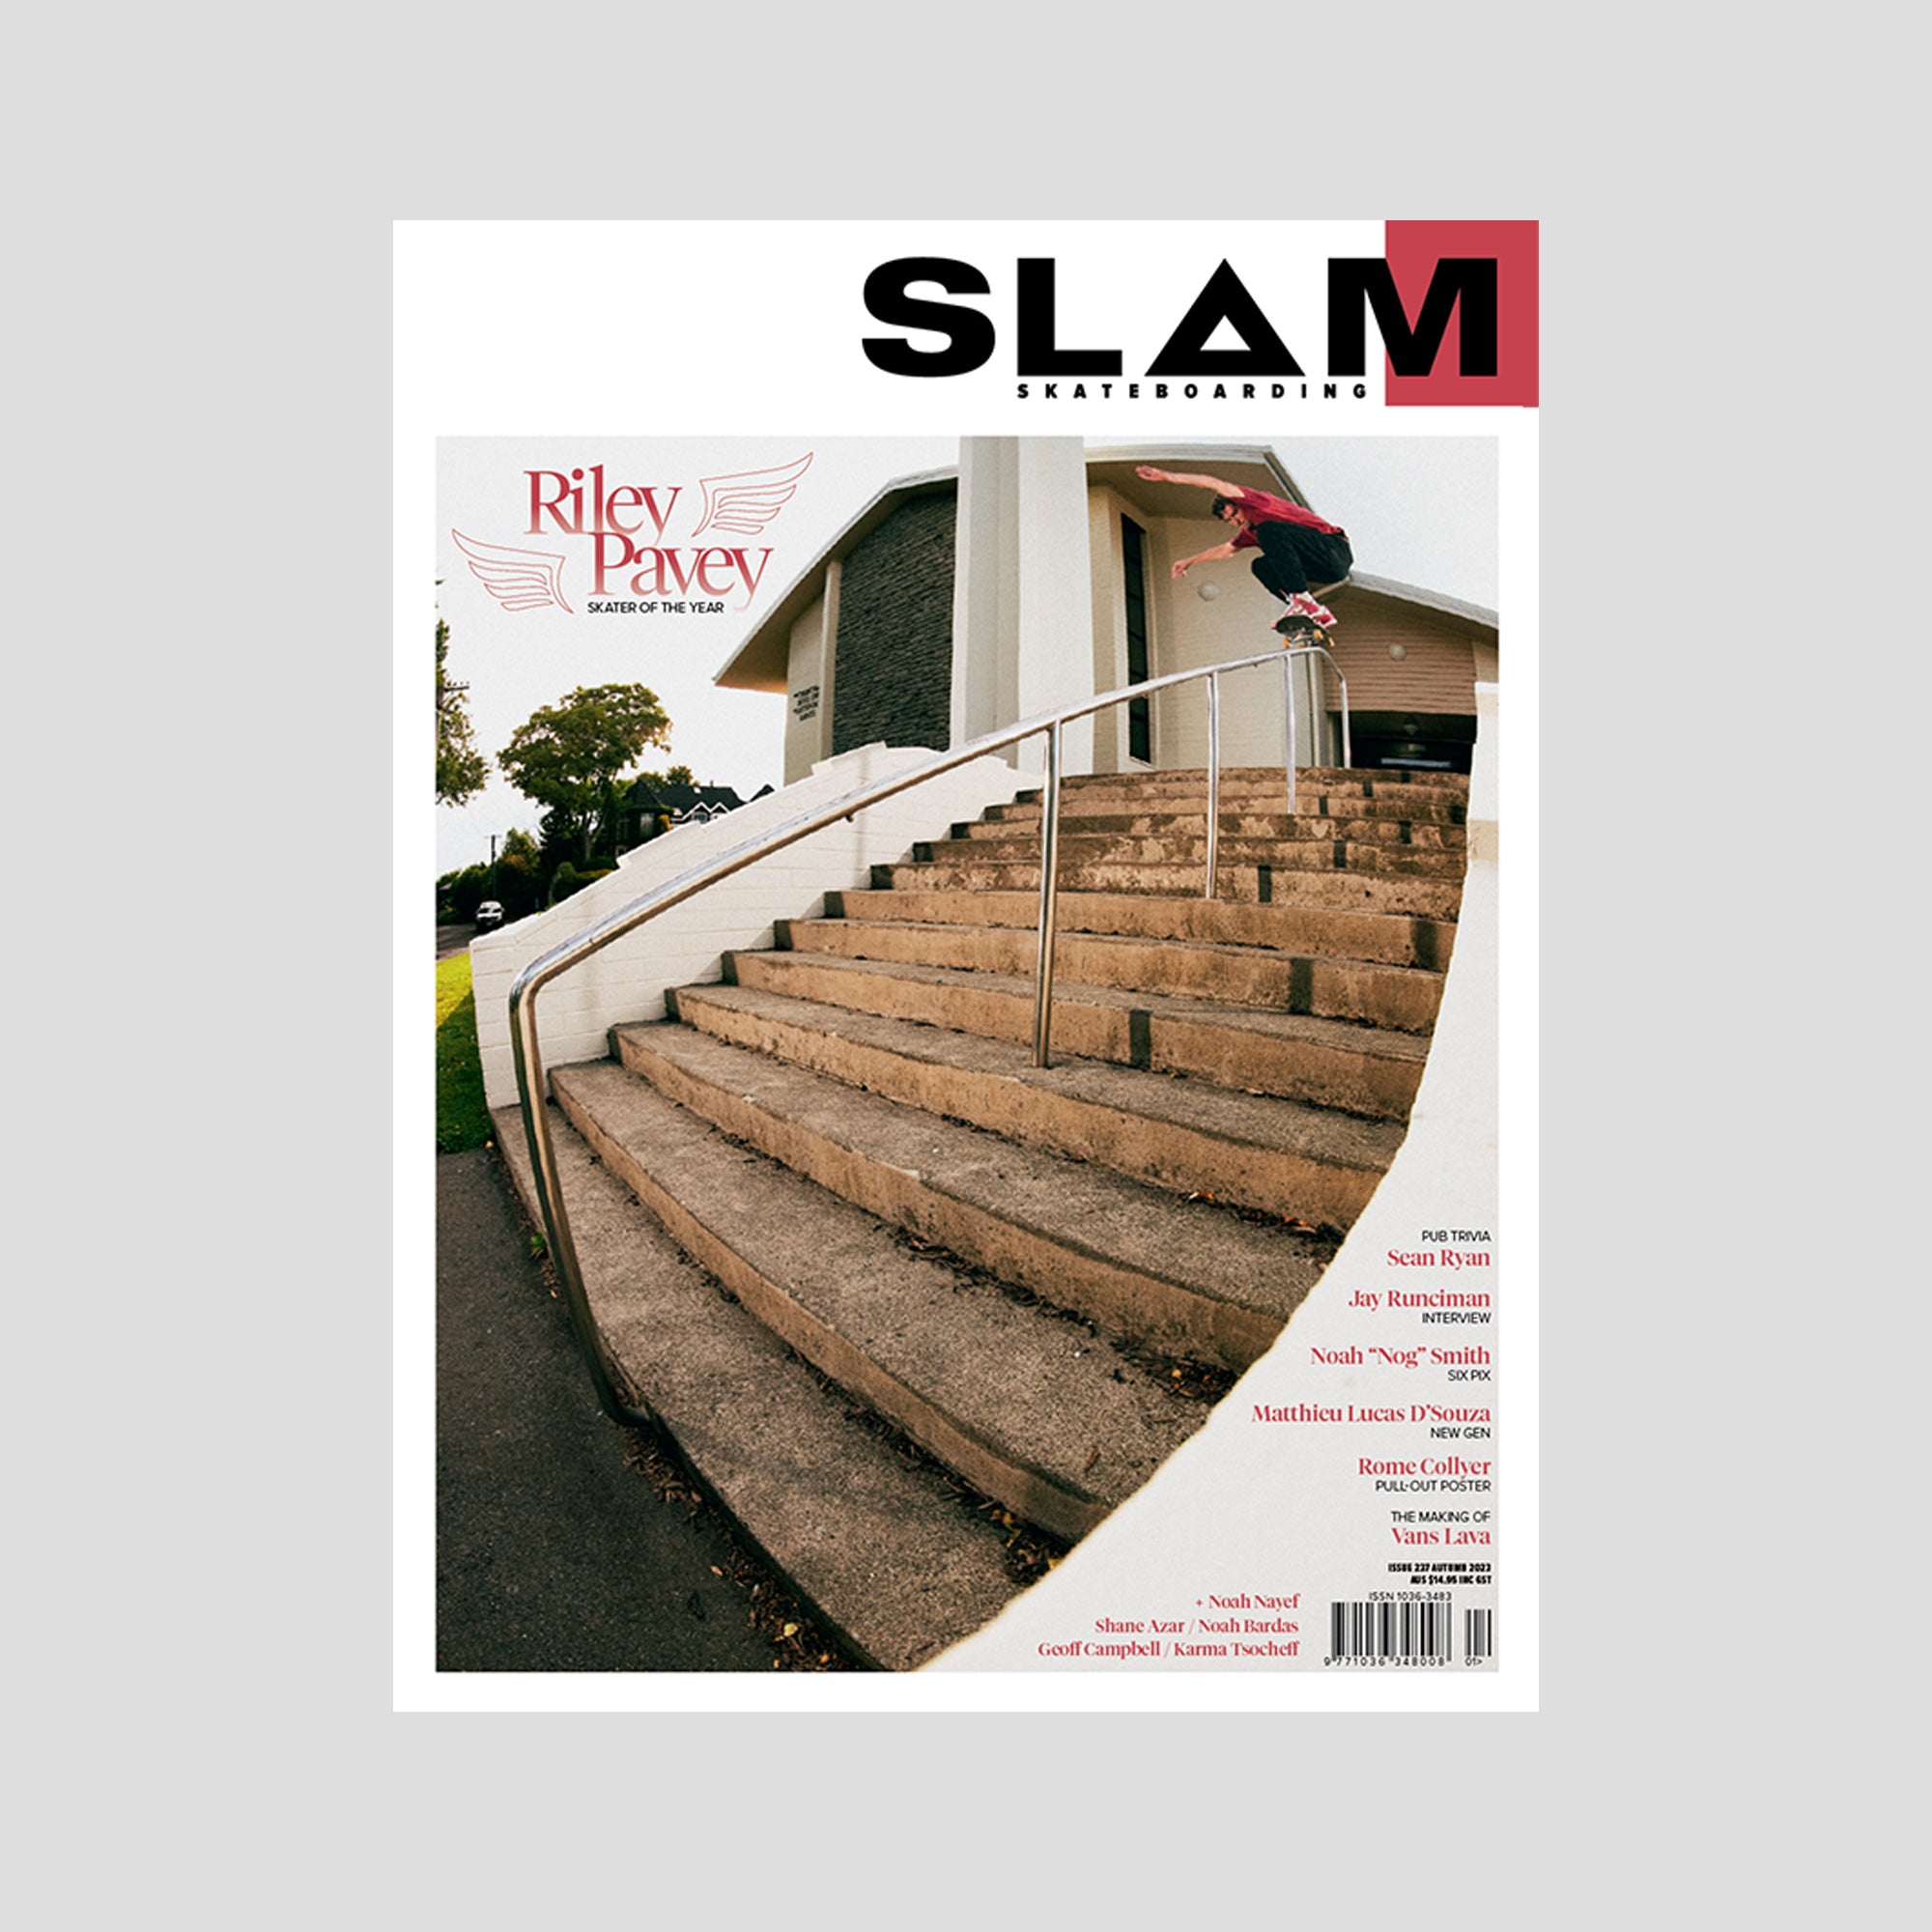 Slam Skateboarding Magazine Issue #237